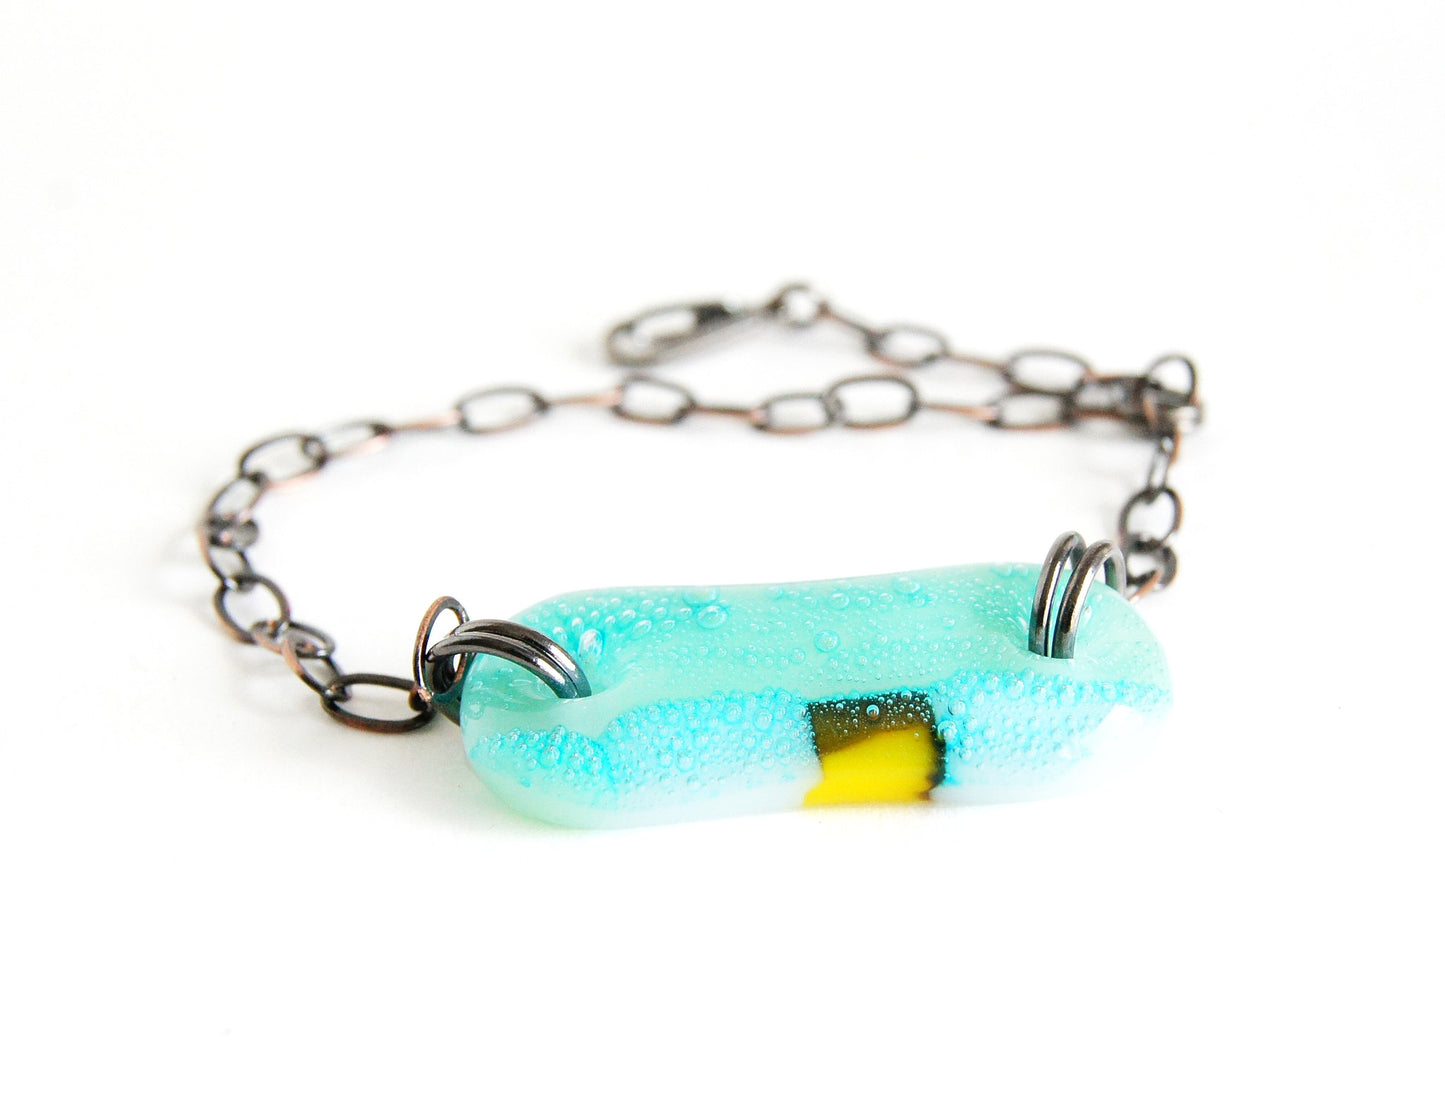 Beach blue glass bracelet with adjustable chain